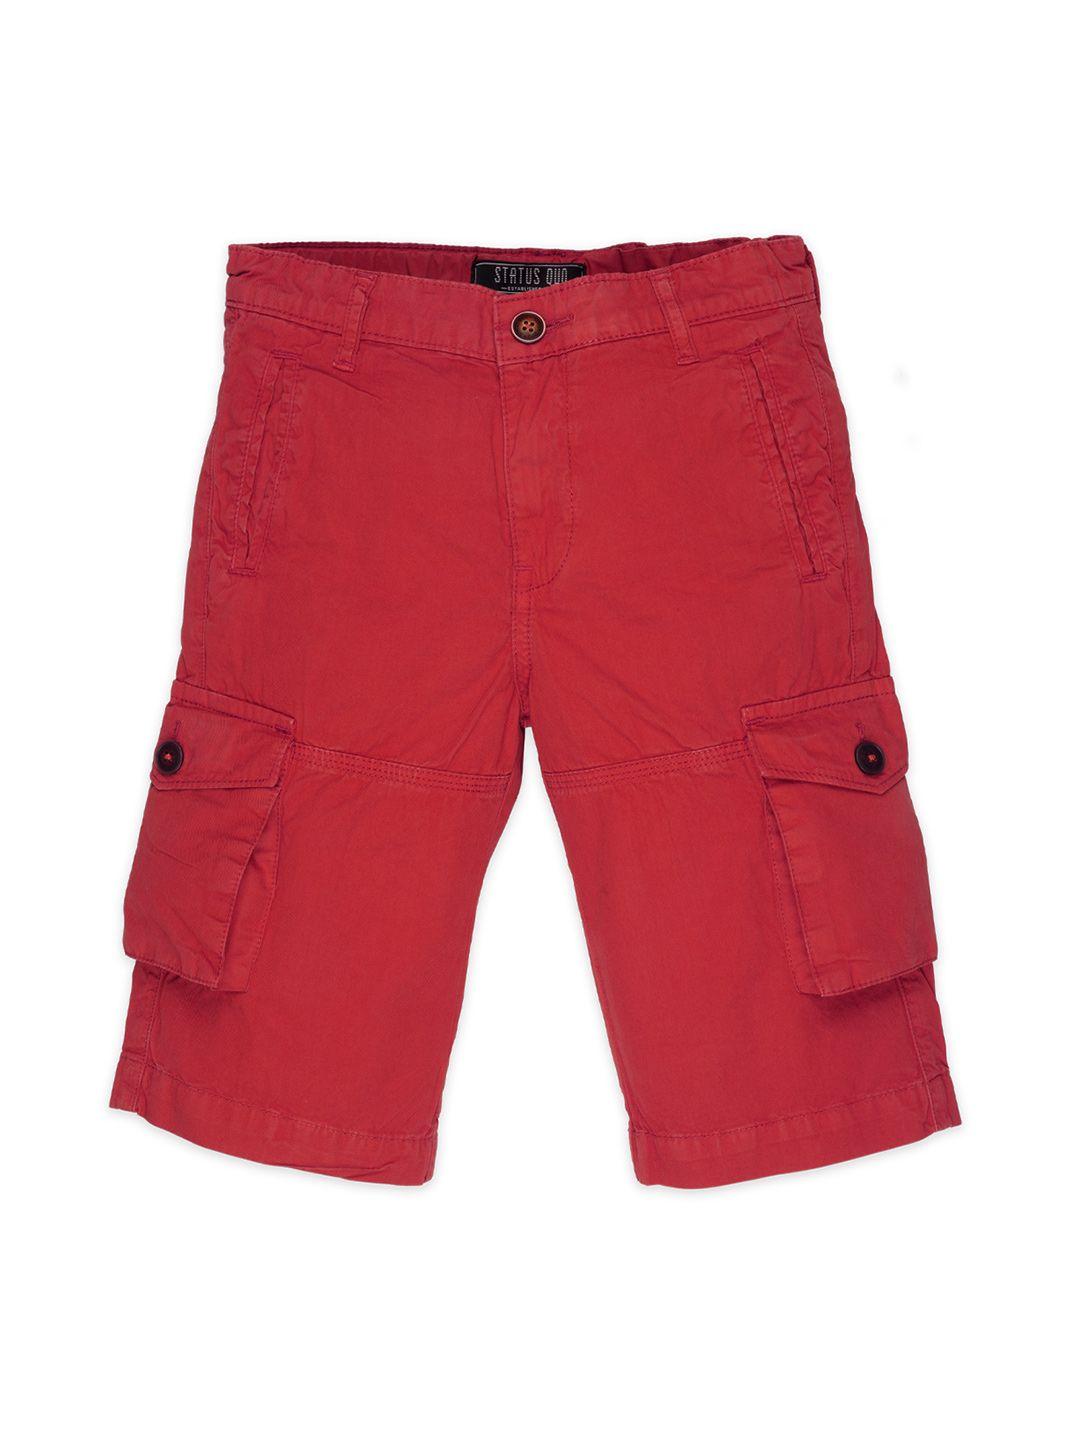 status quo boys red regular fit cargo shorts